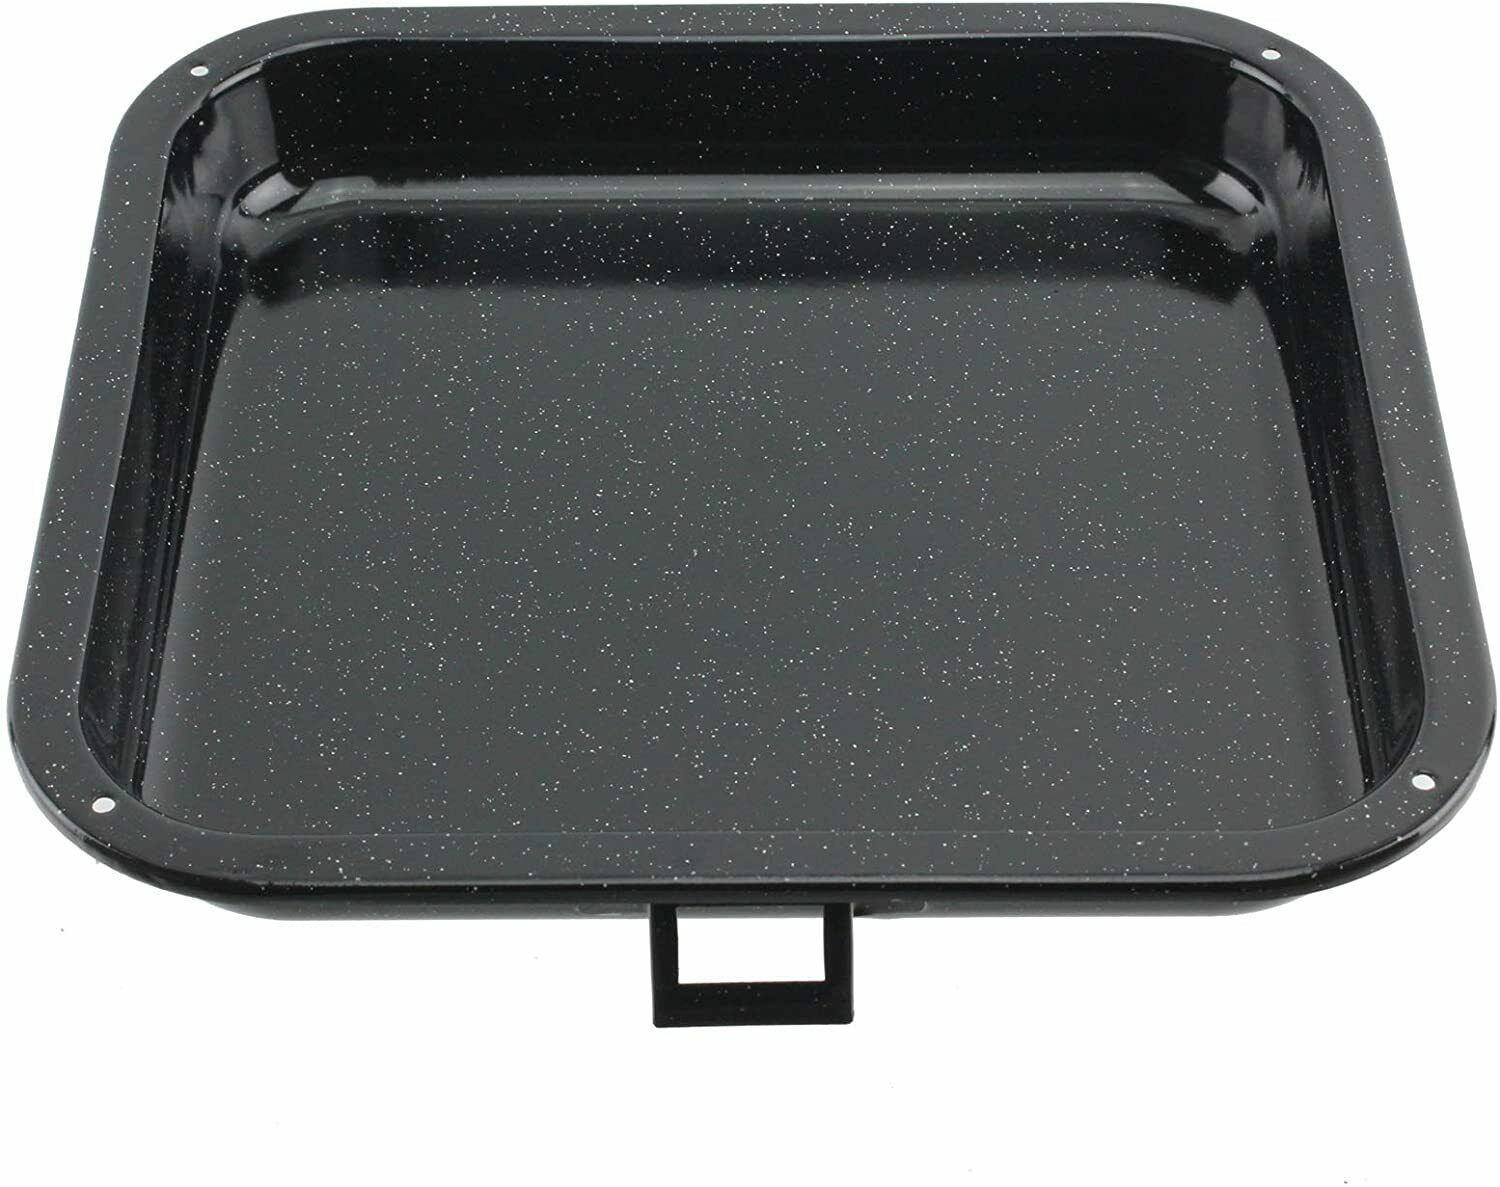 Inside of black enameled grill pan